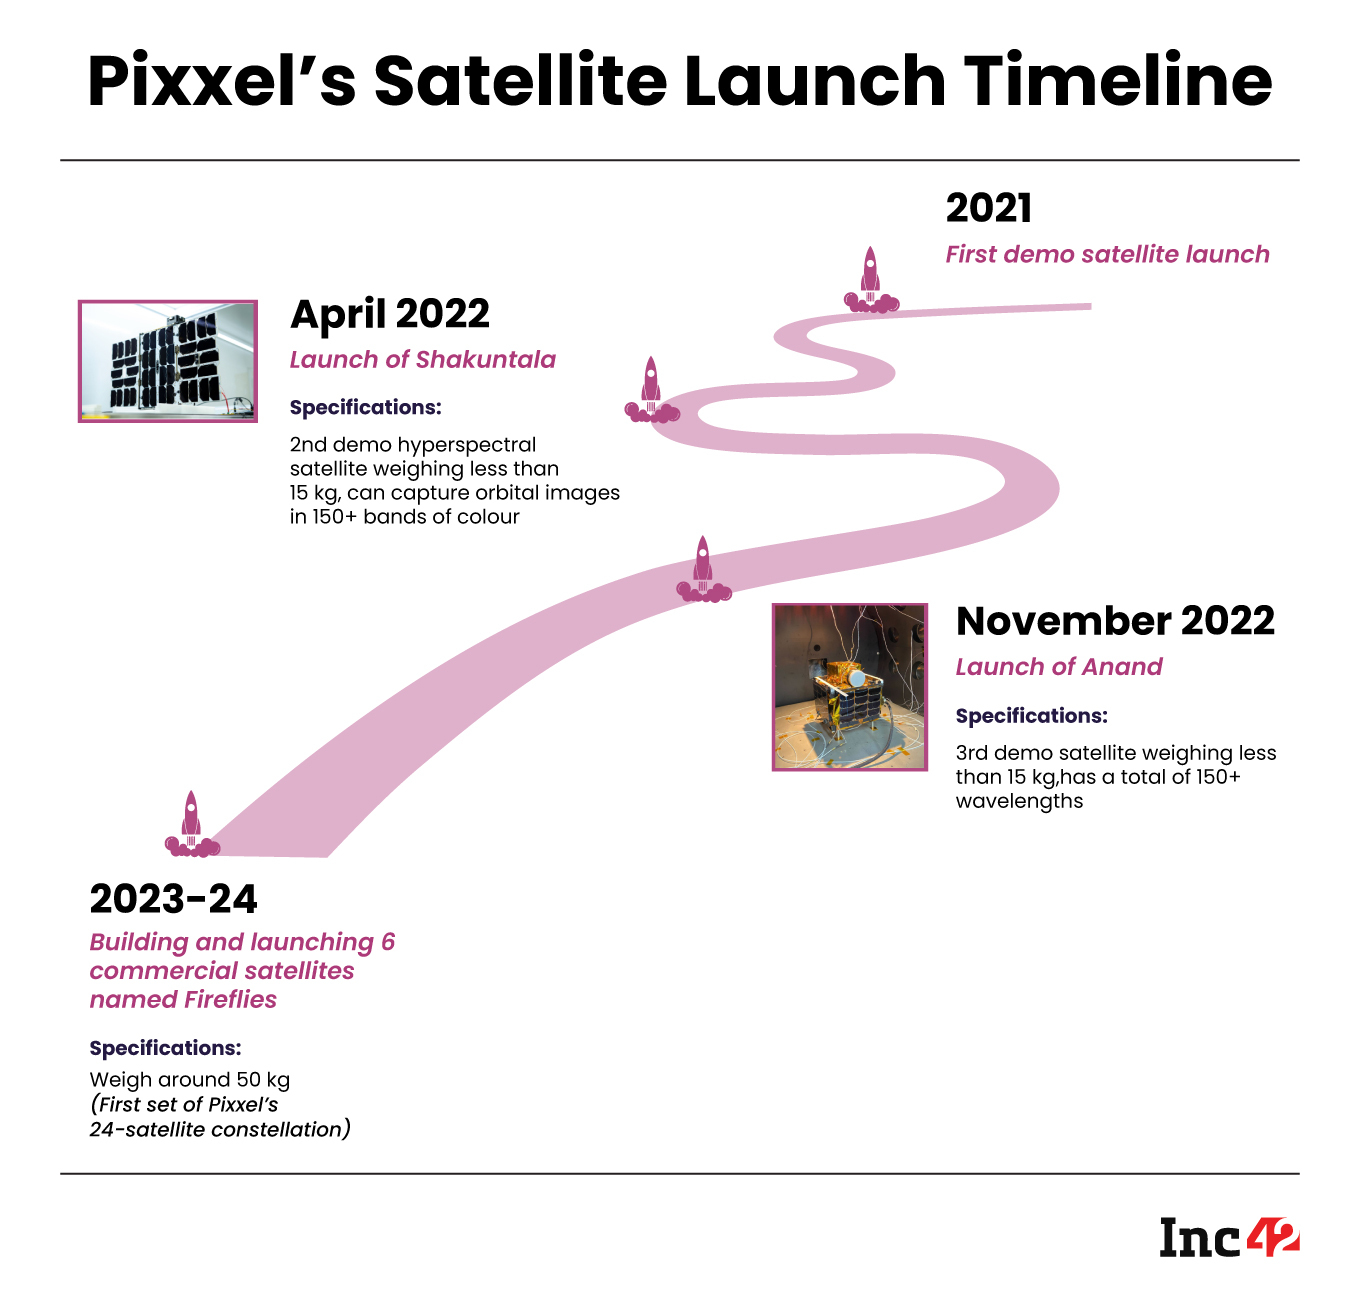 Pixxel's satellite launch timeline